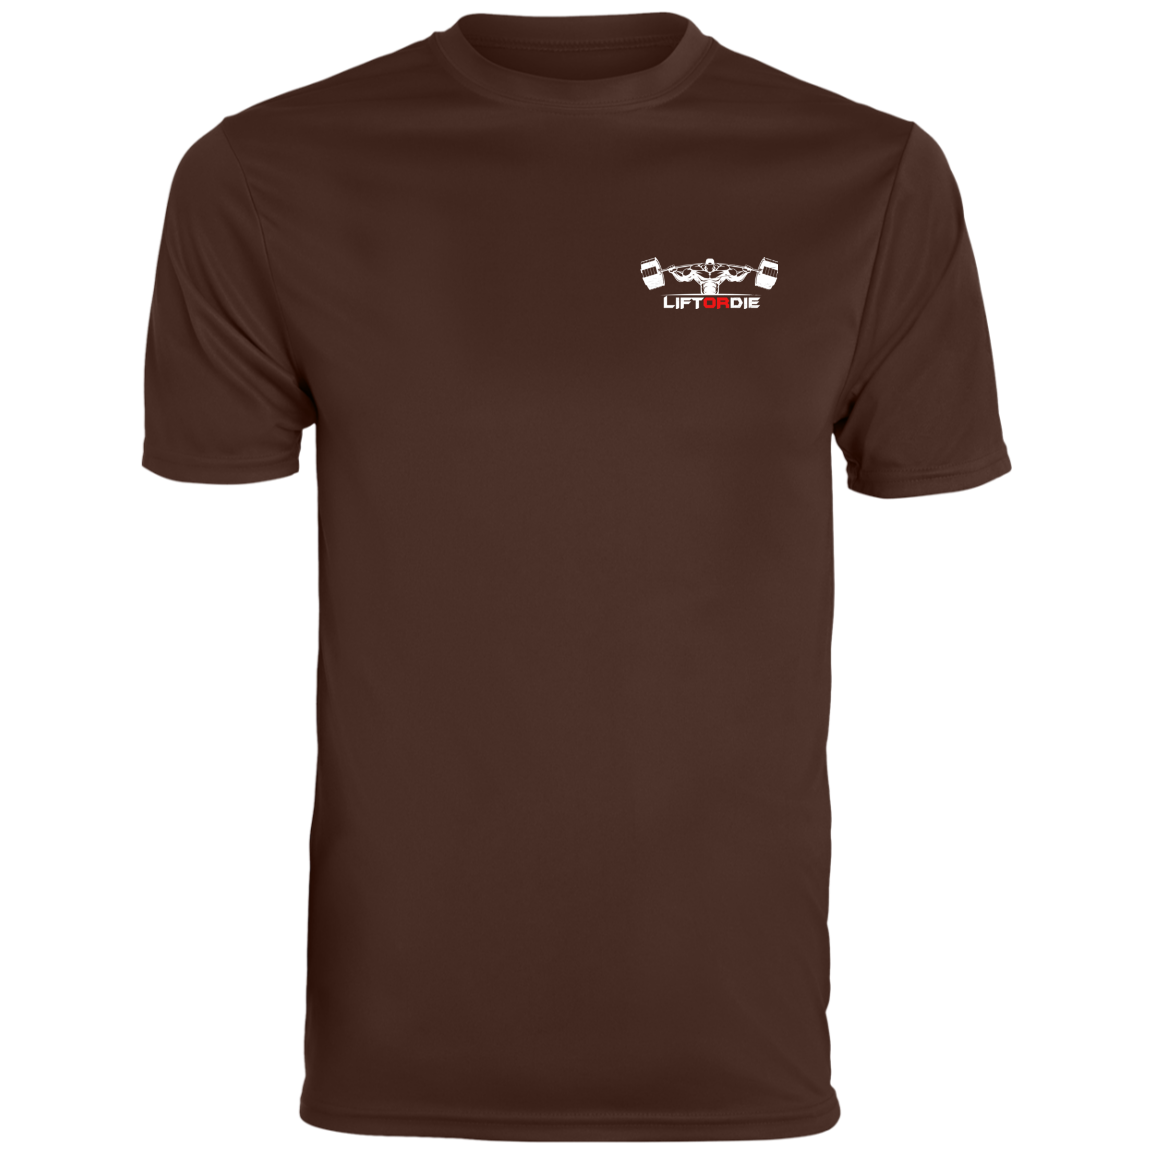 790 Augusta Men's Wicking T-Shirt